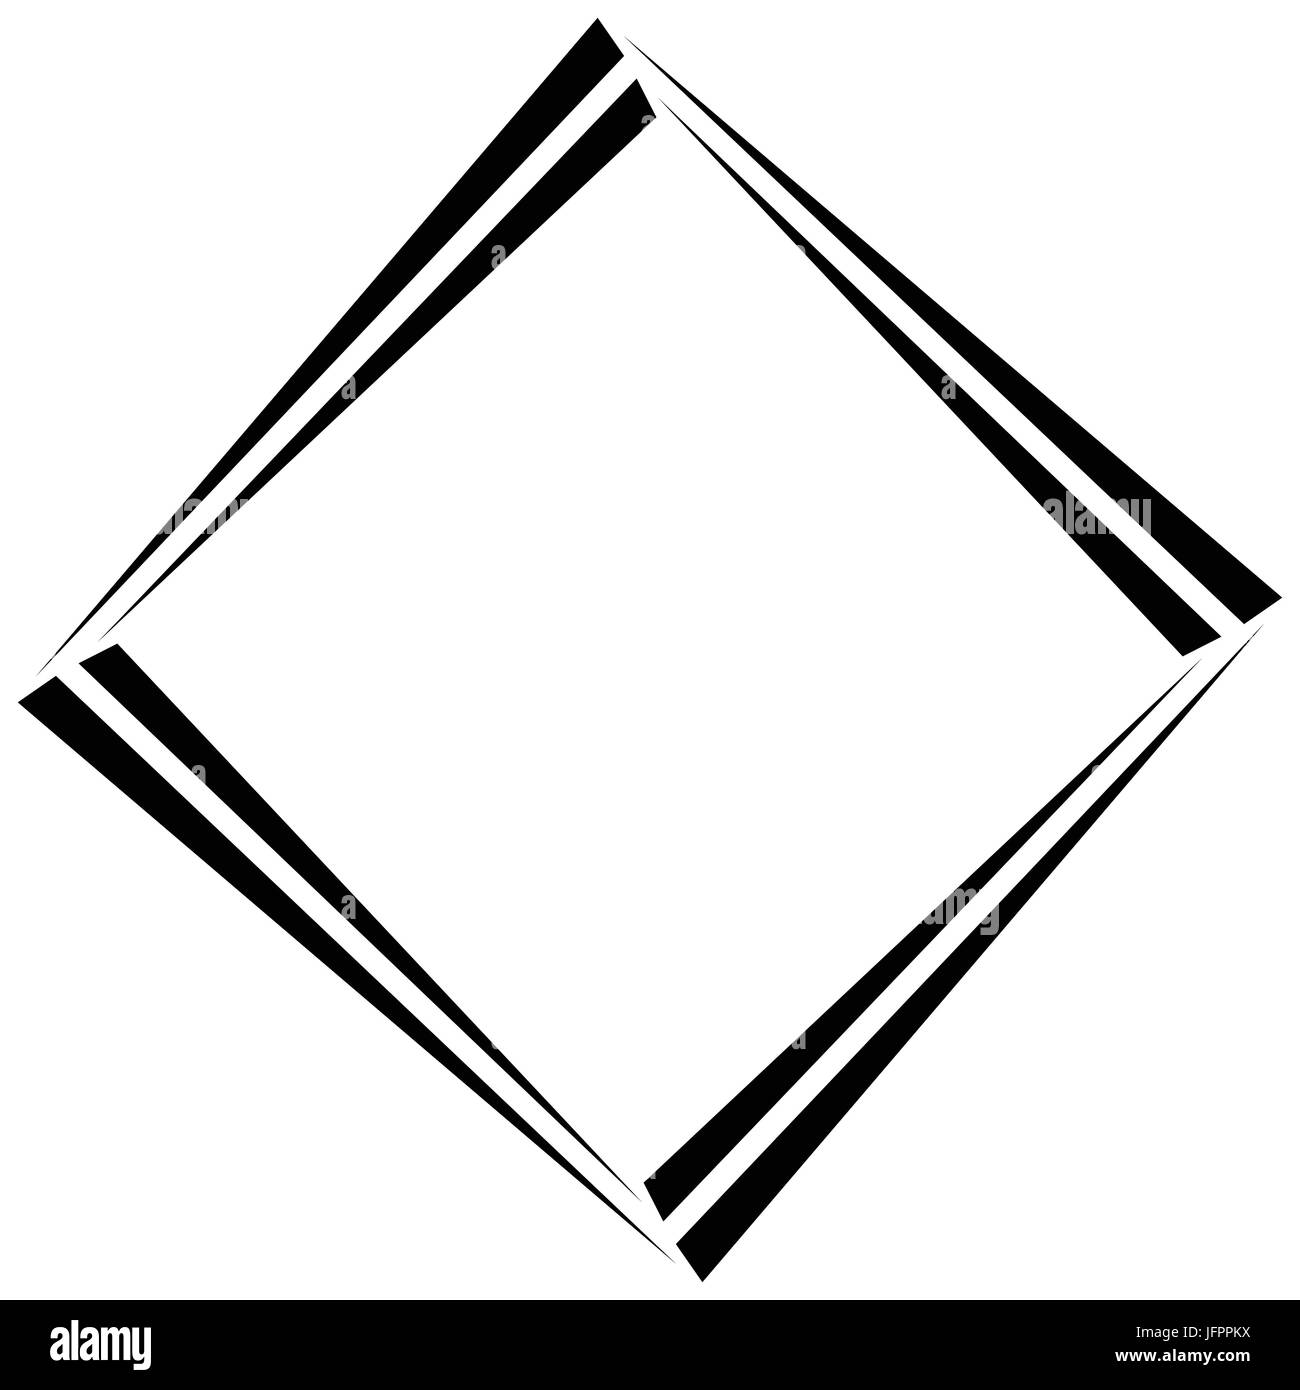 Square geometric element abstract square symbol. Square logo Stock Vector